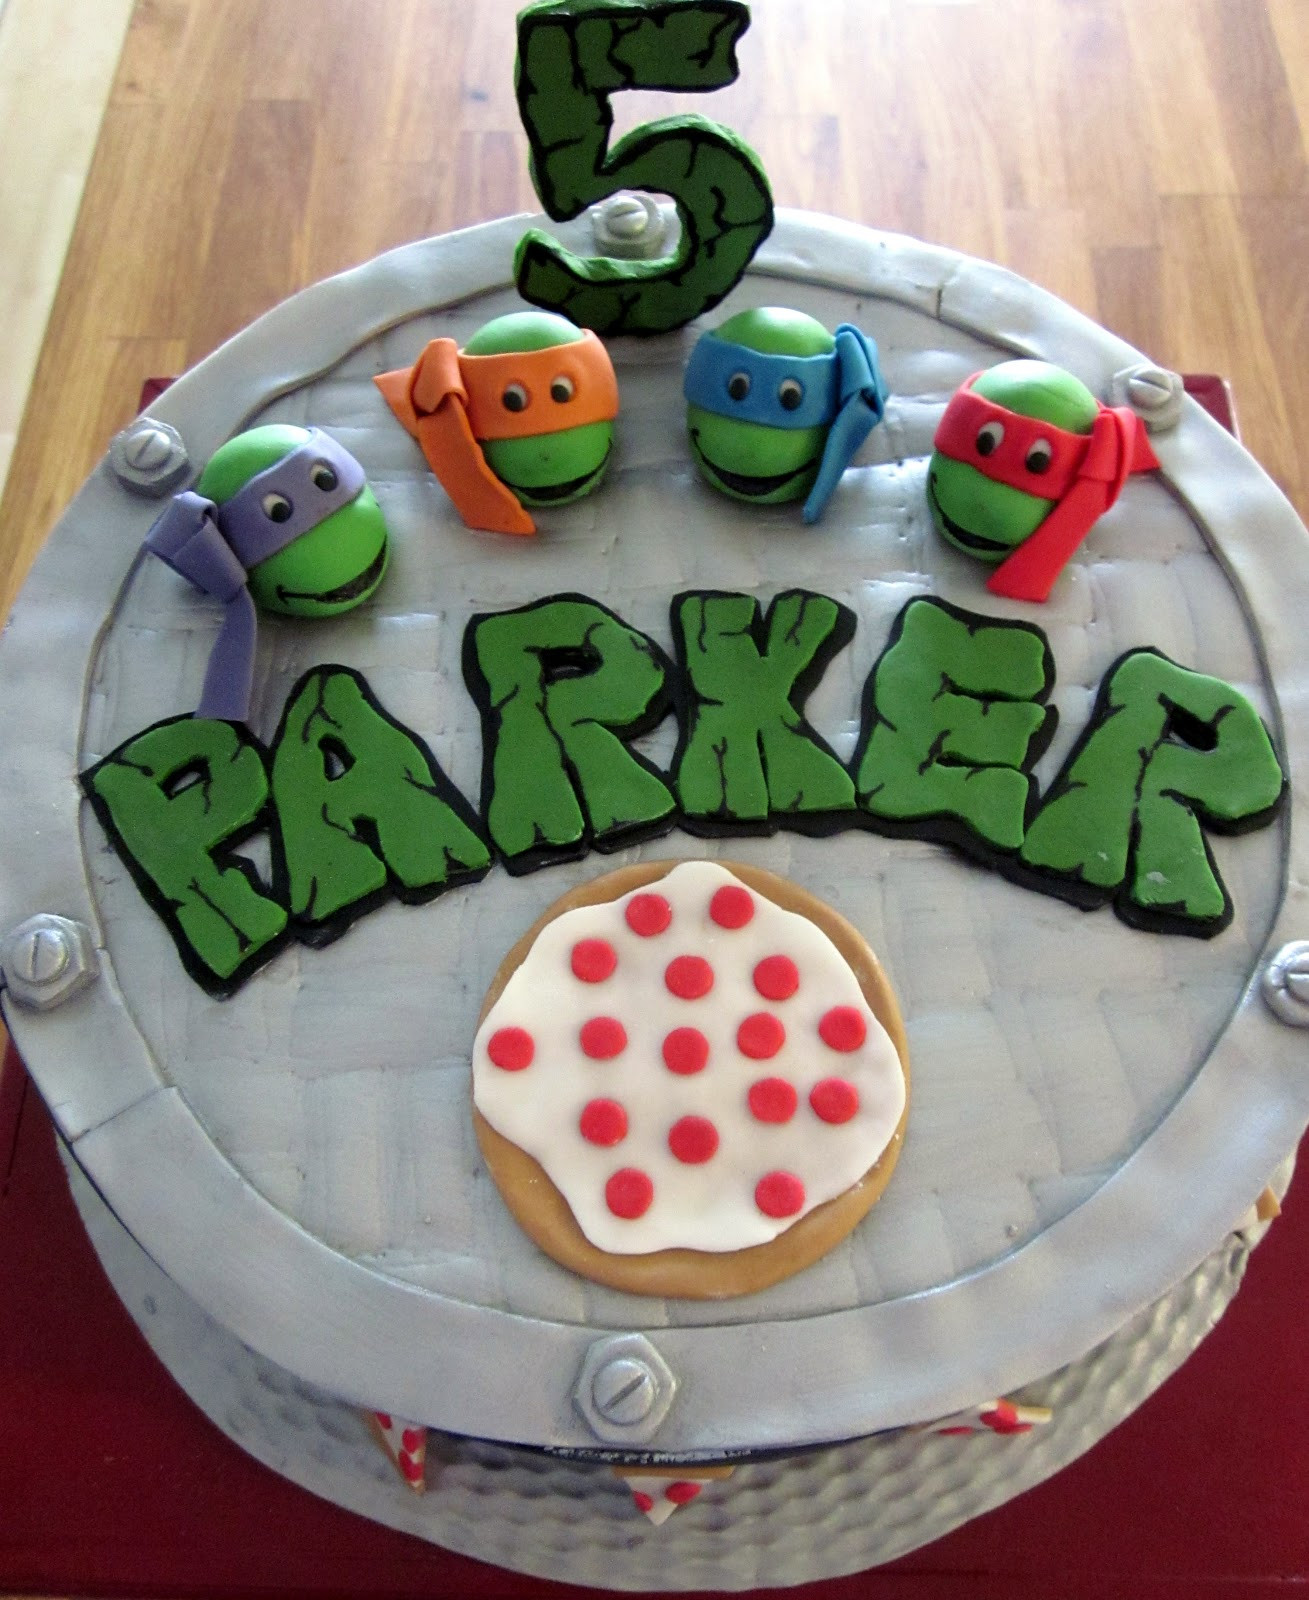 Ninja Turtle Birthday Cake
 Darlin Designs Teenage Mutant Ninja Turtle Birthday Cake